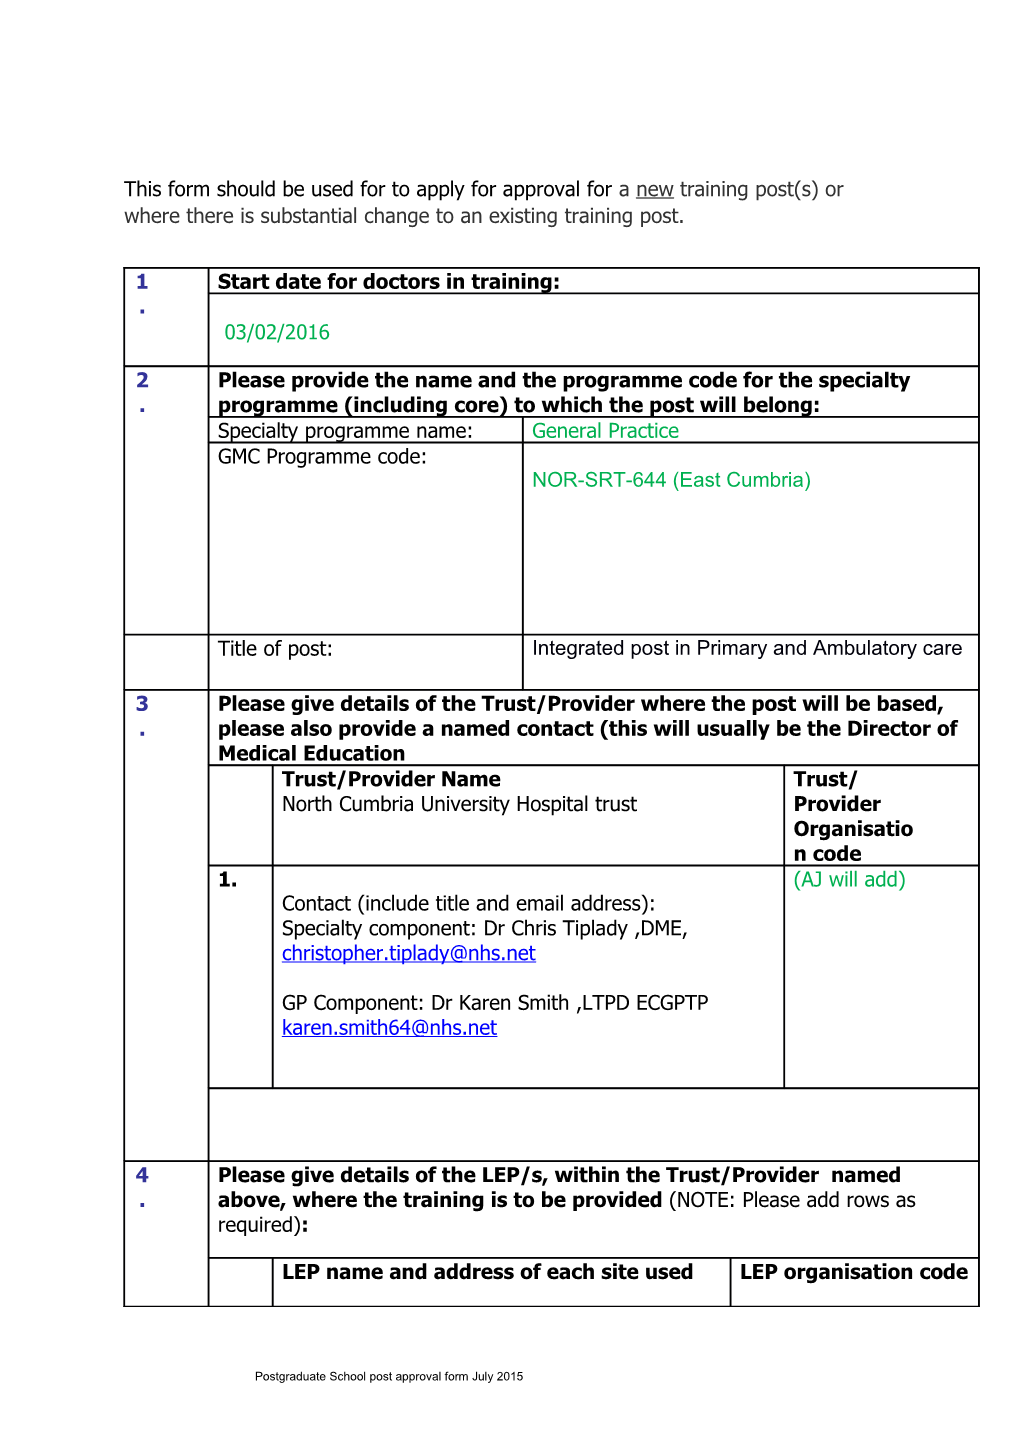 Postgraduate School Post Approval Form July 2015